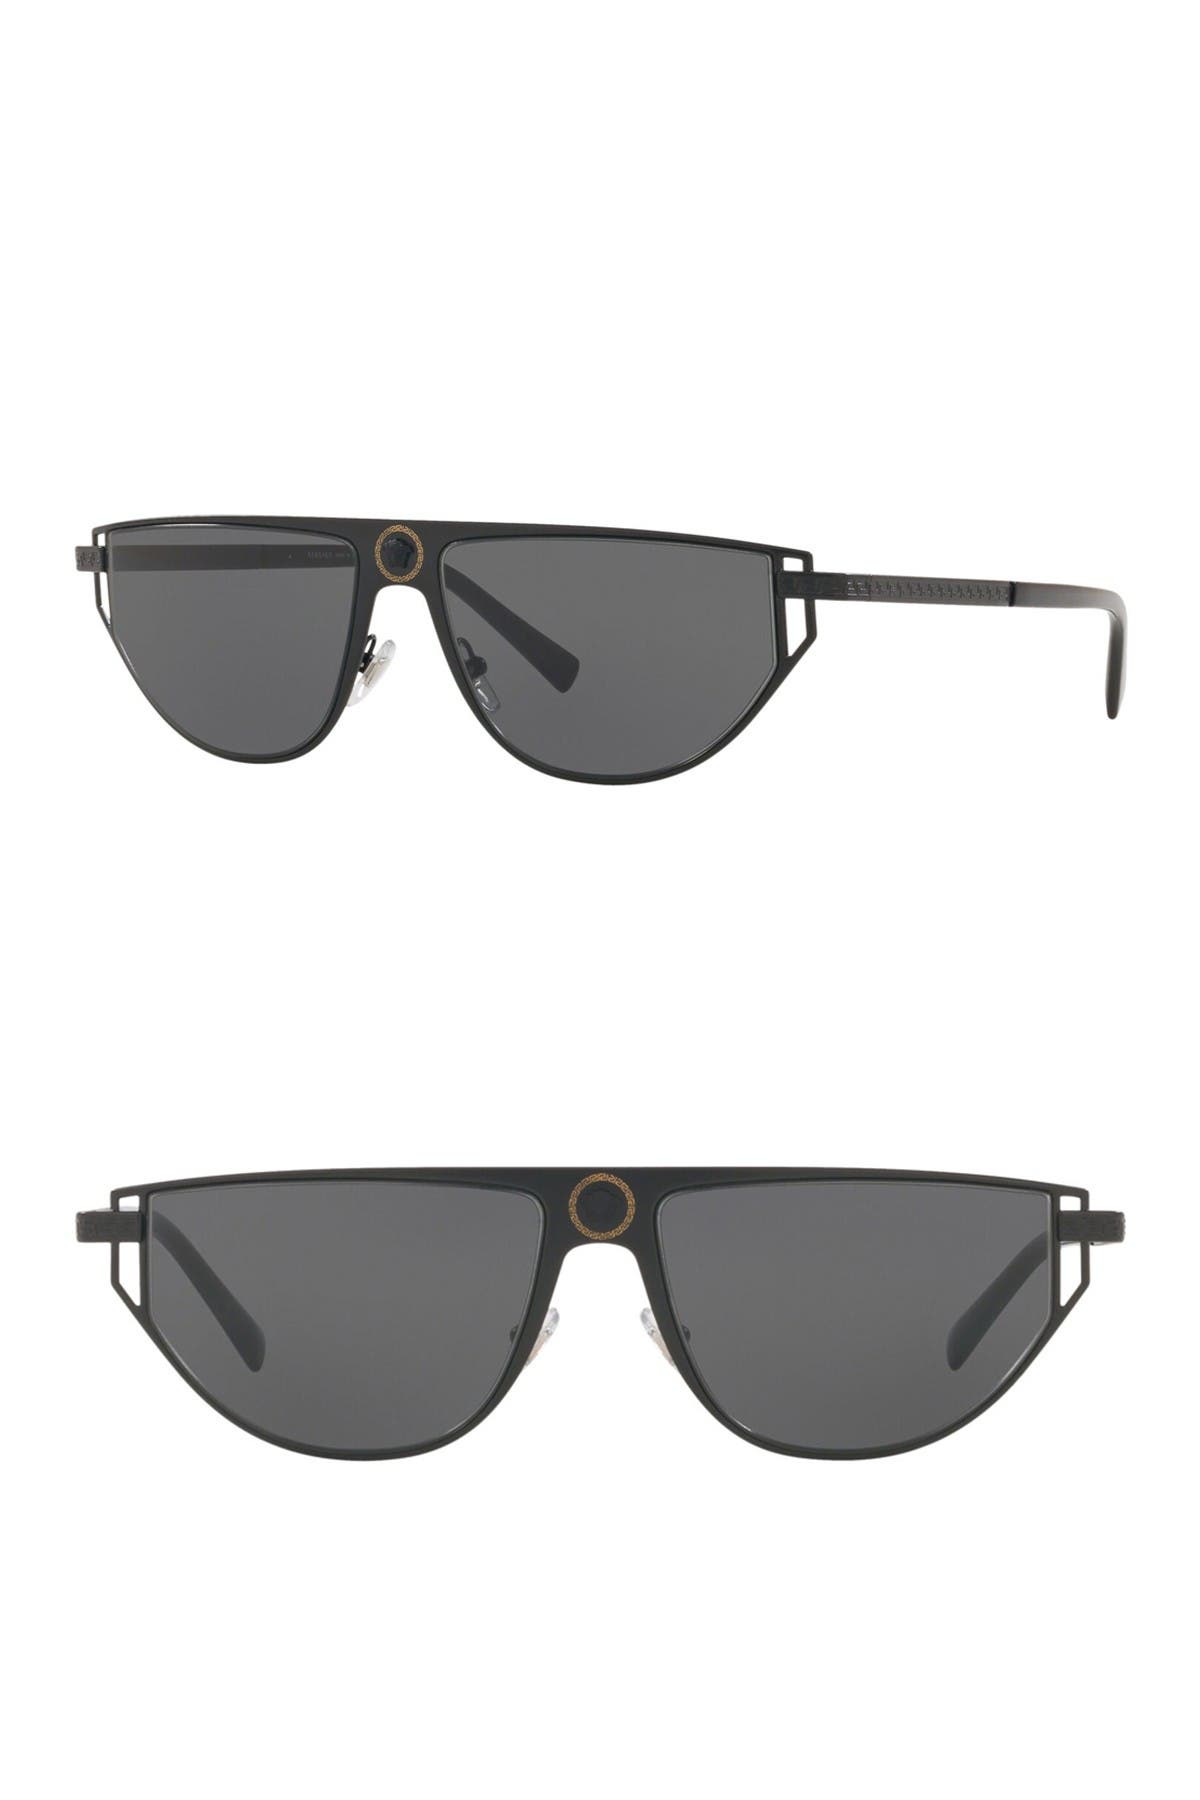 Versace | 57mm Flat Top Sunglasses 